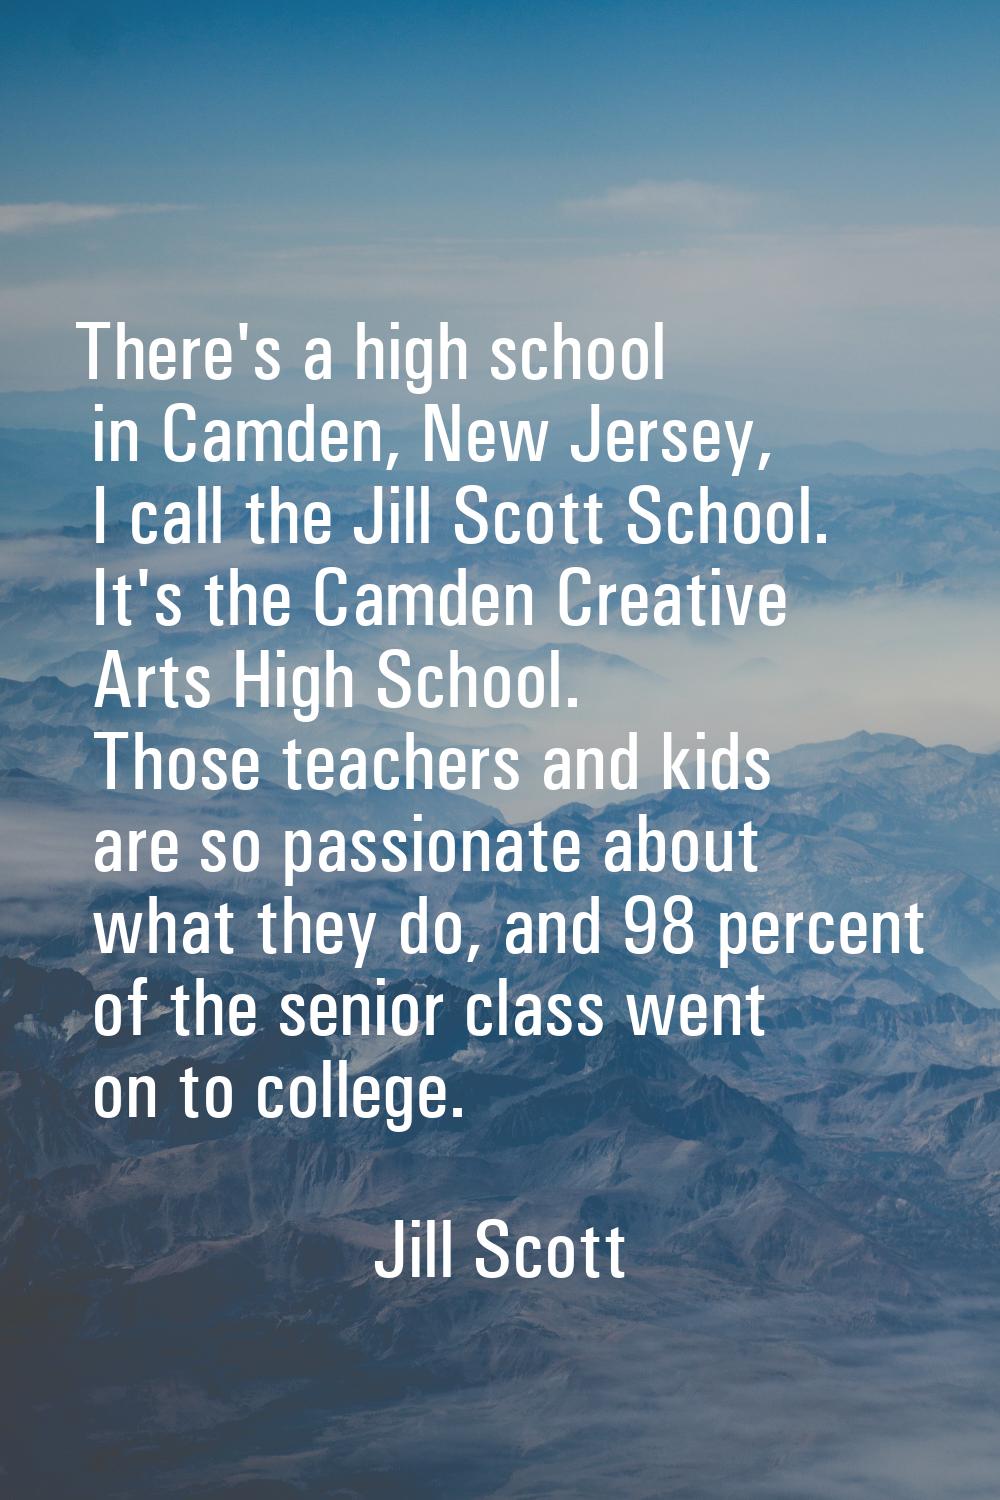 There's a high school in Camden, New Jersey, I call the Jill Scott School. It's the Camden Creative